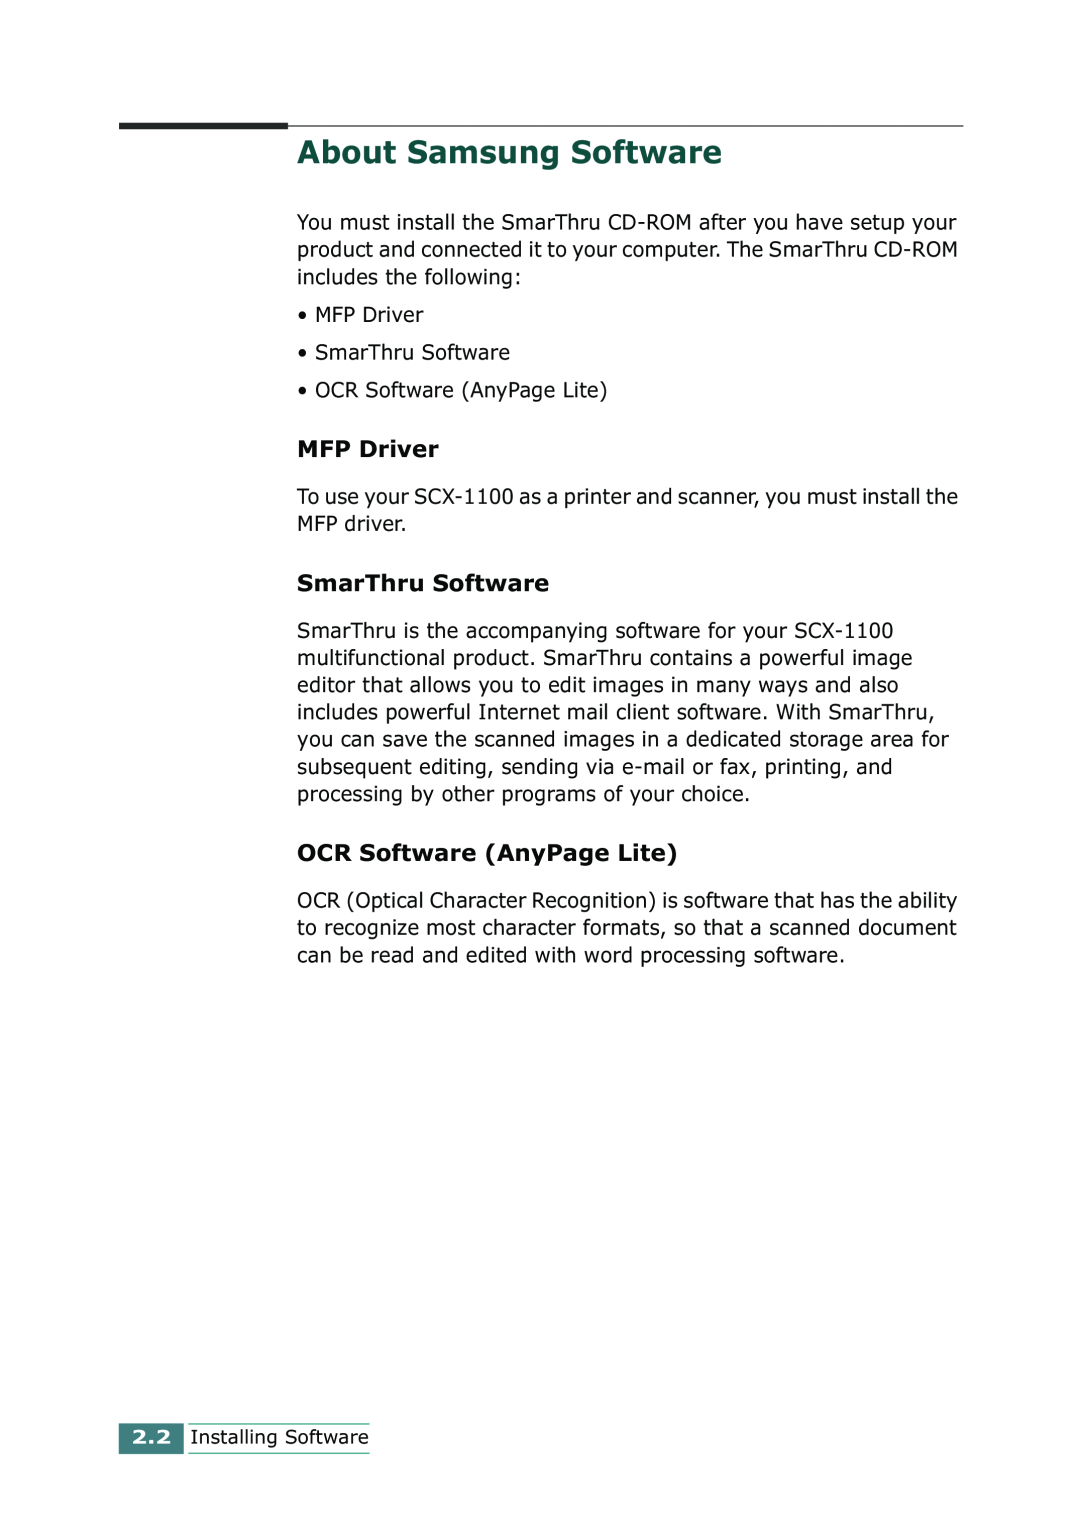 Samsung SCX-1100 manual About Samsung Software, MFP Driver, SmarThru Software, OCR Software AnyPage Lite 